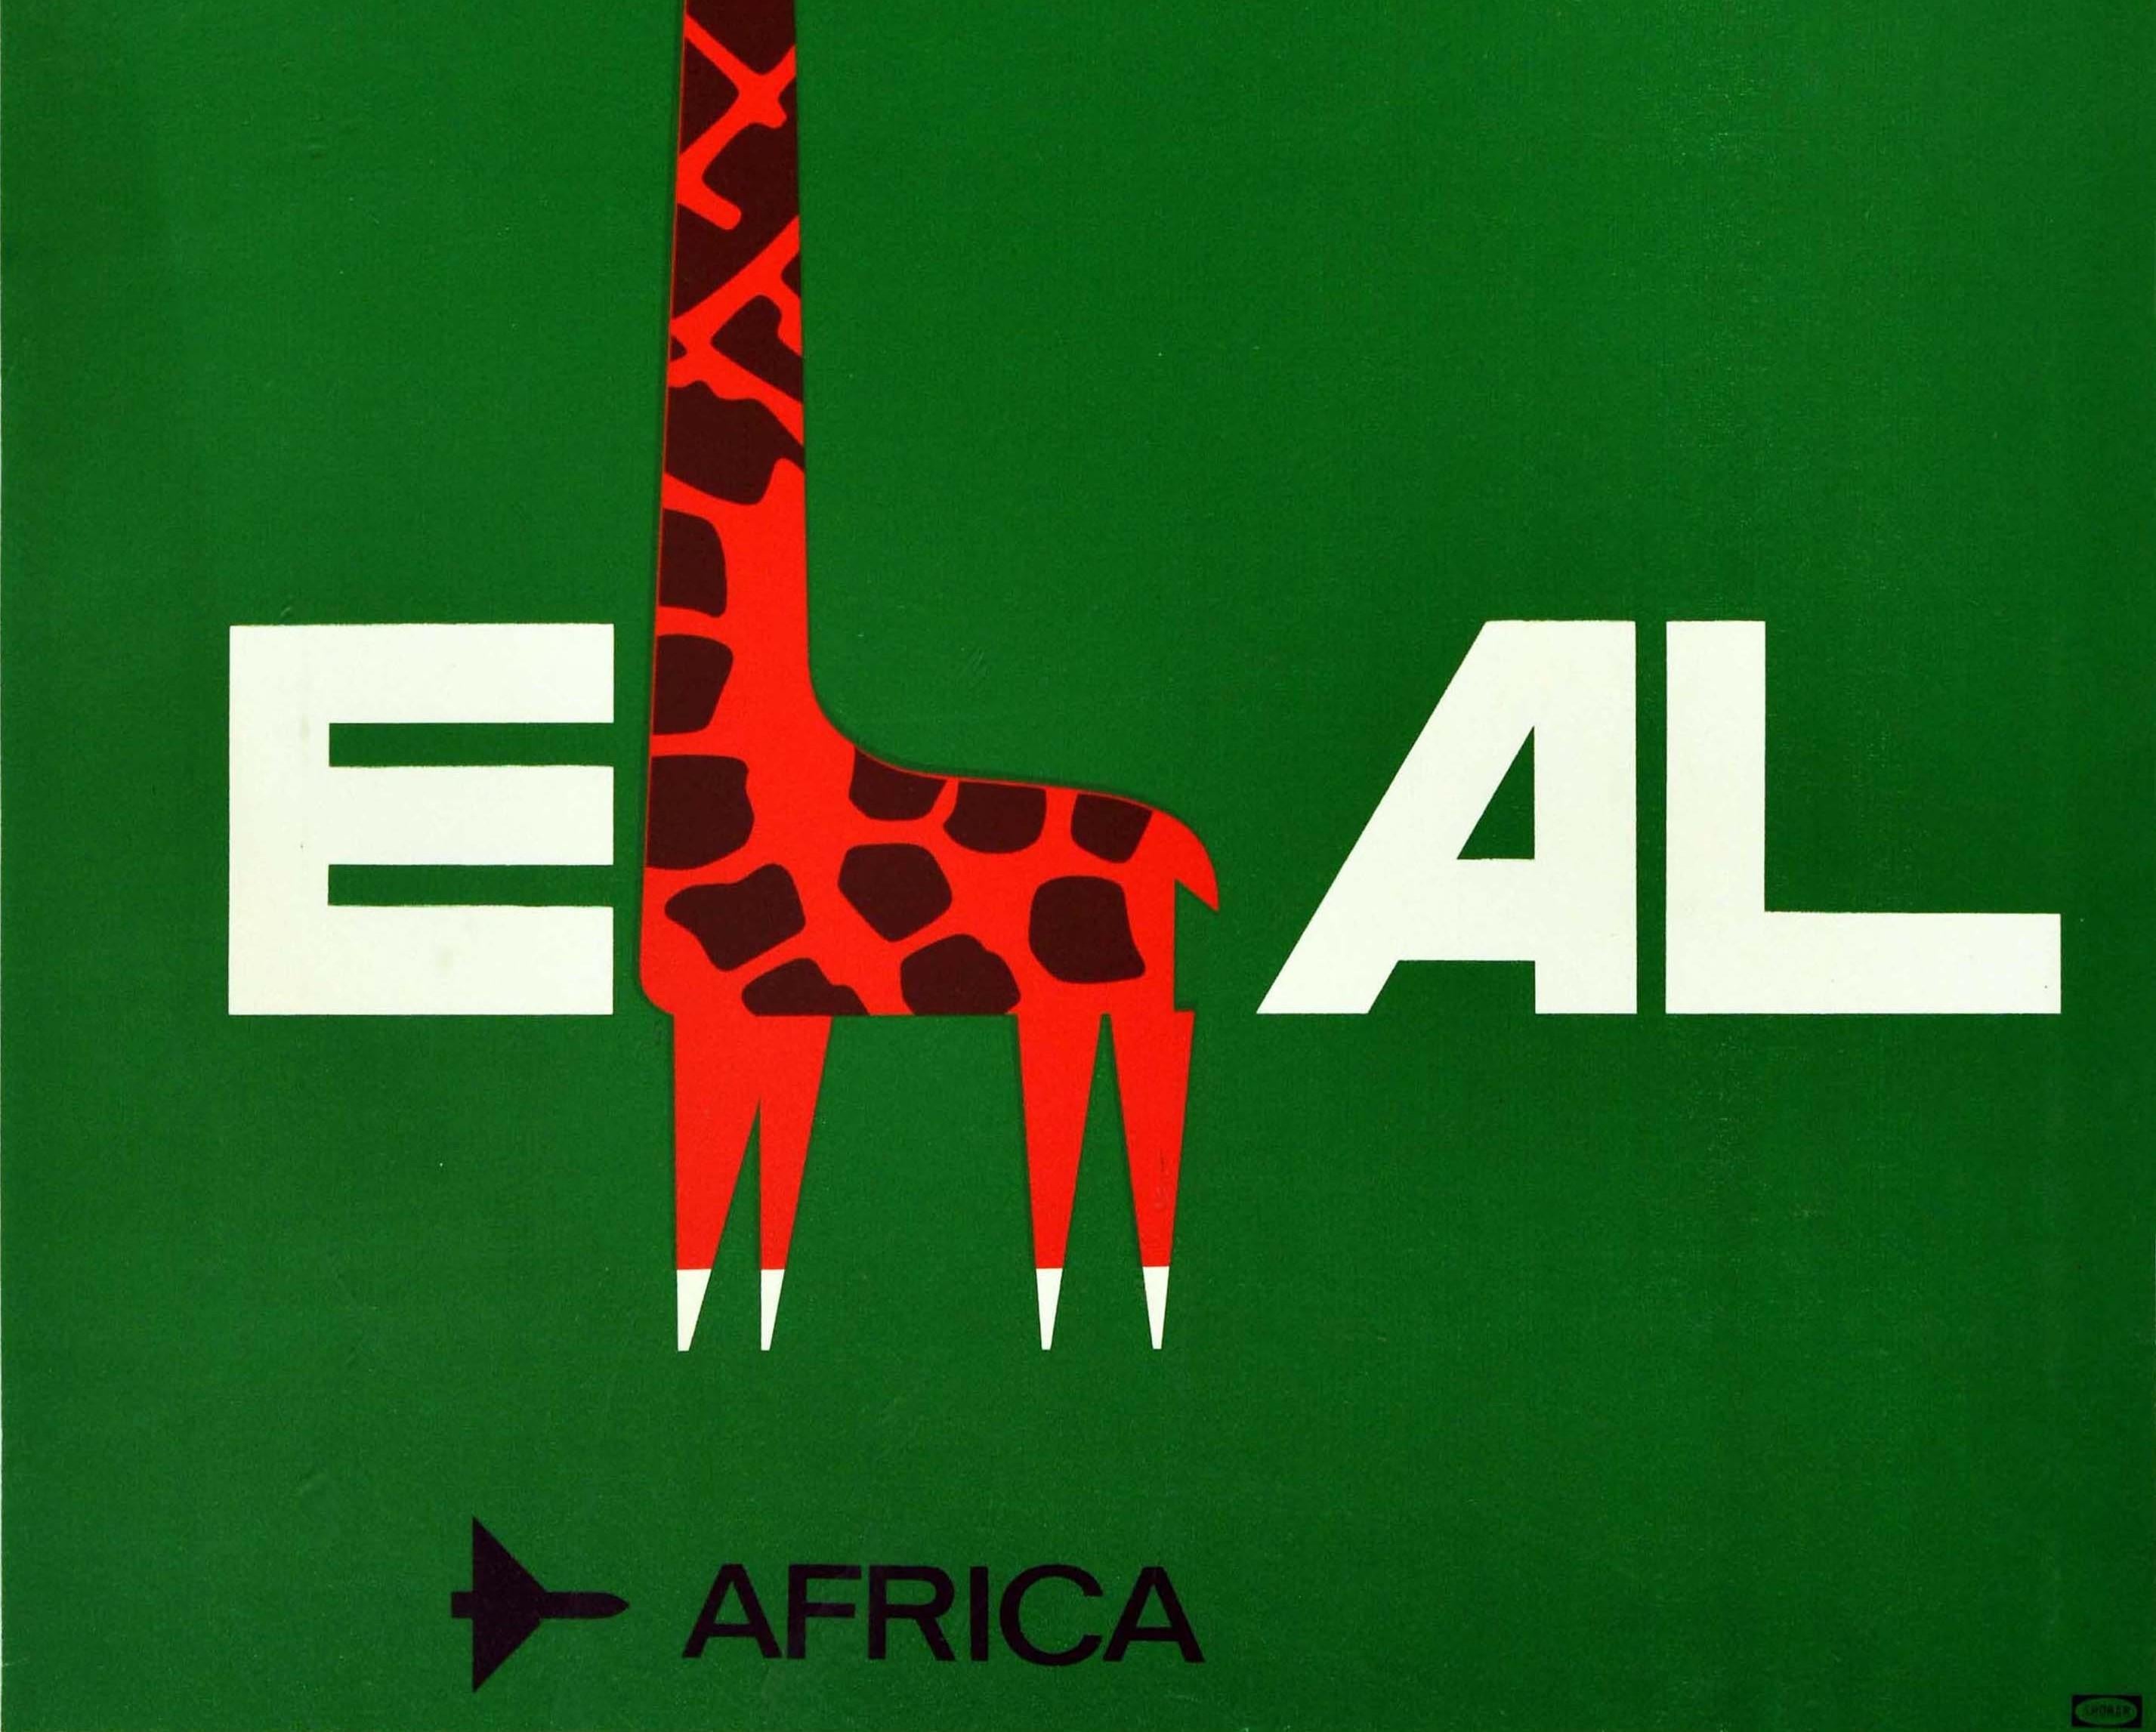 airline with giraffe logo